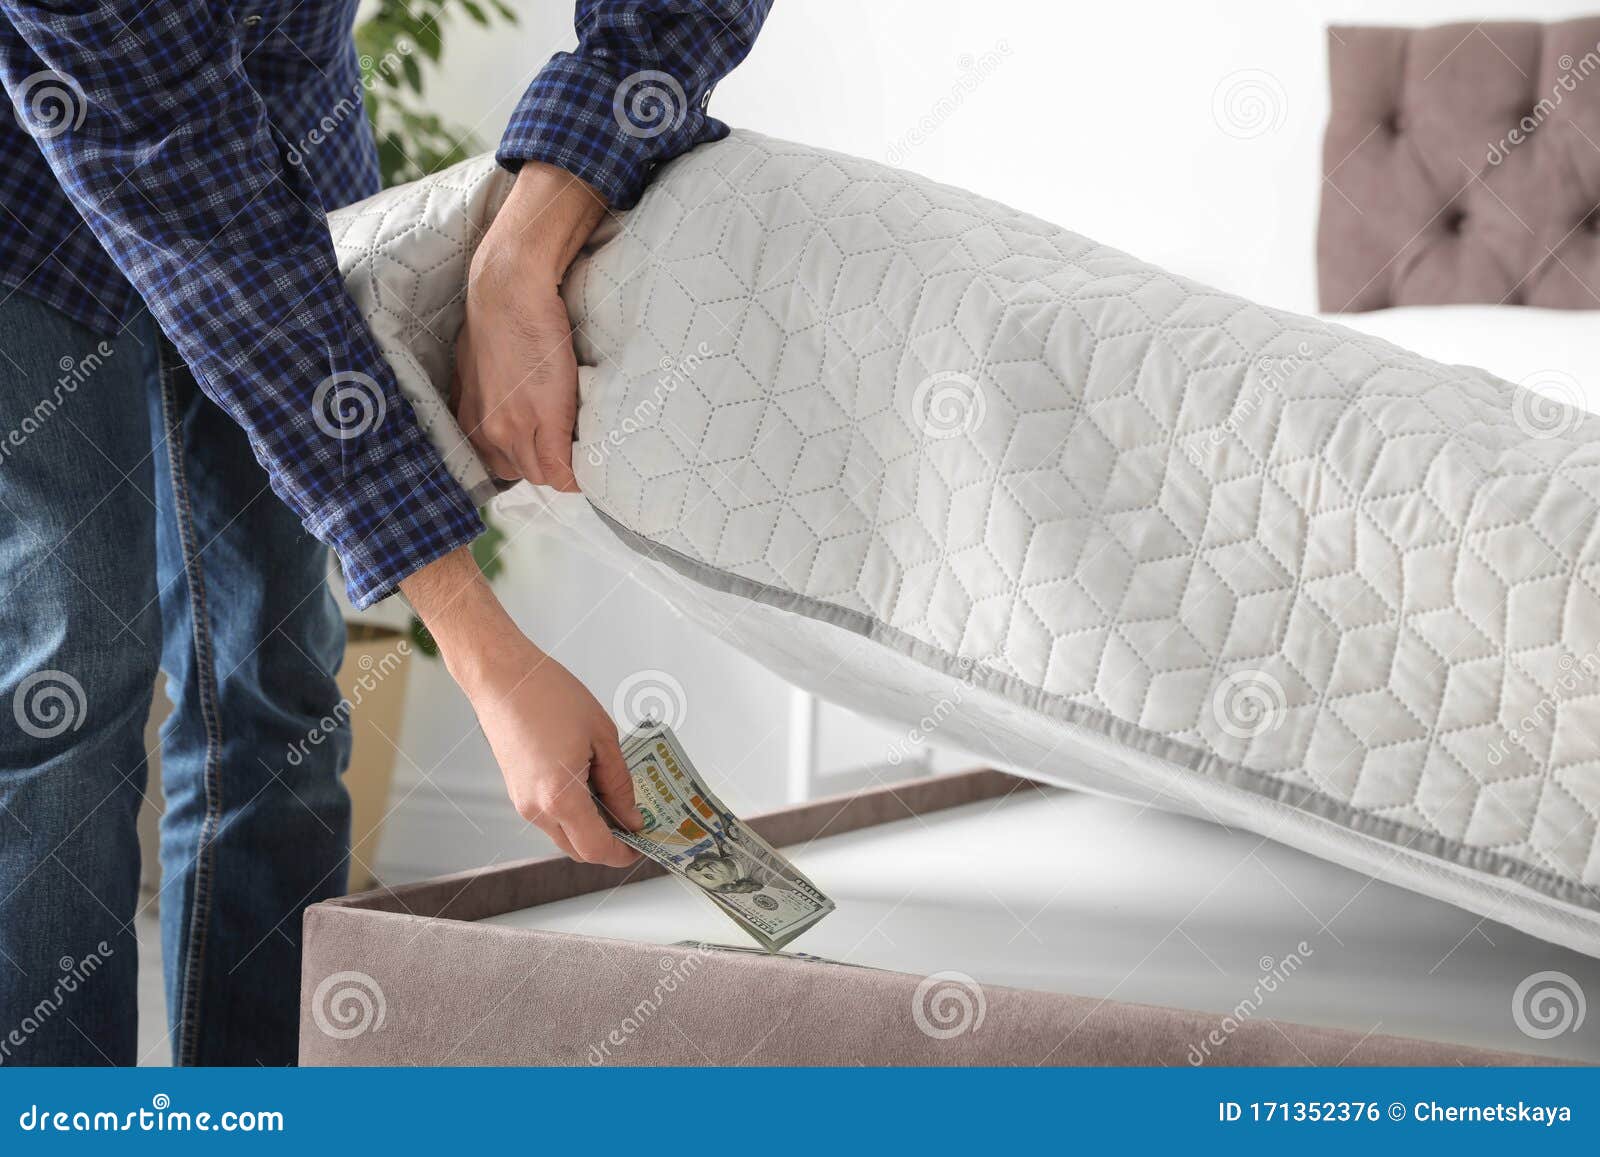 mattress pad under 10 dollars